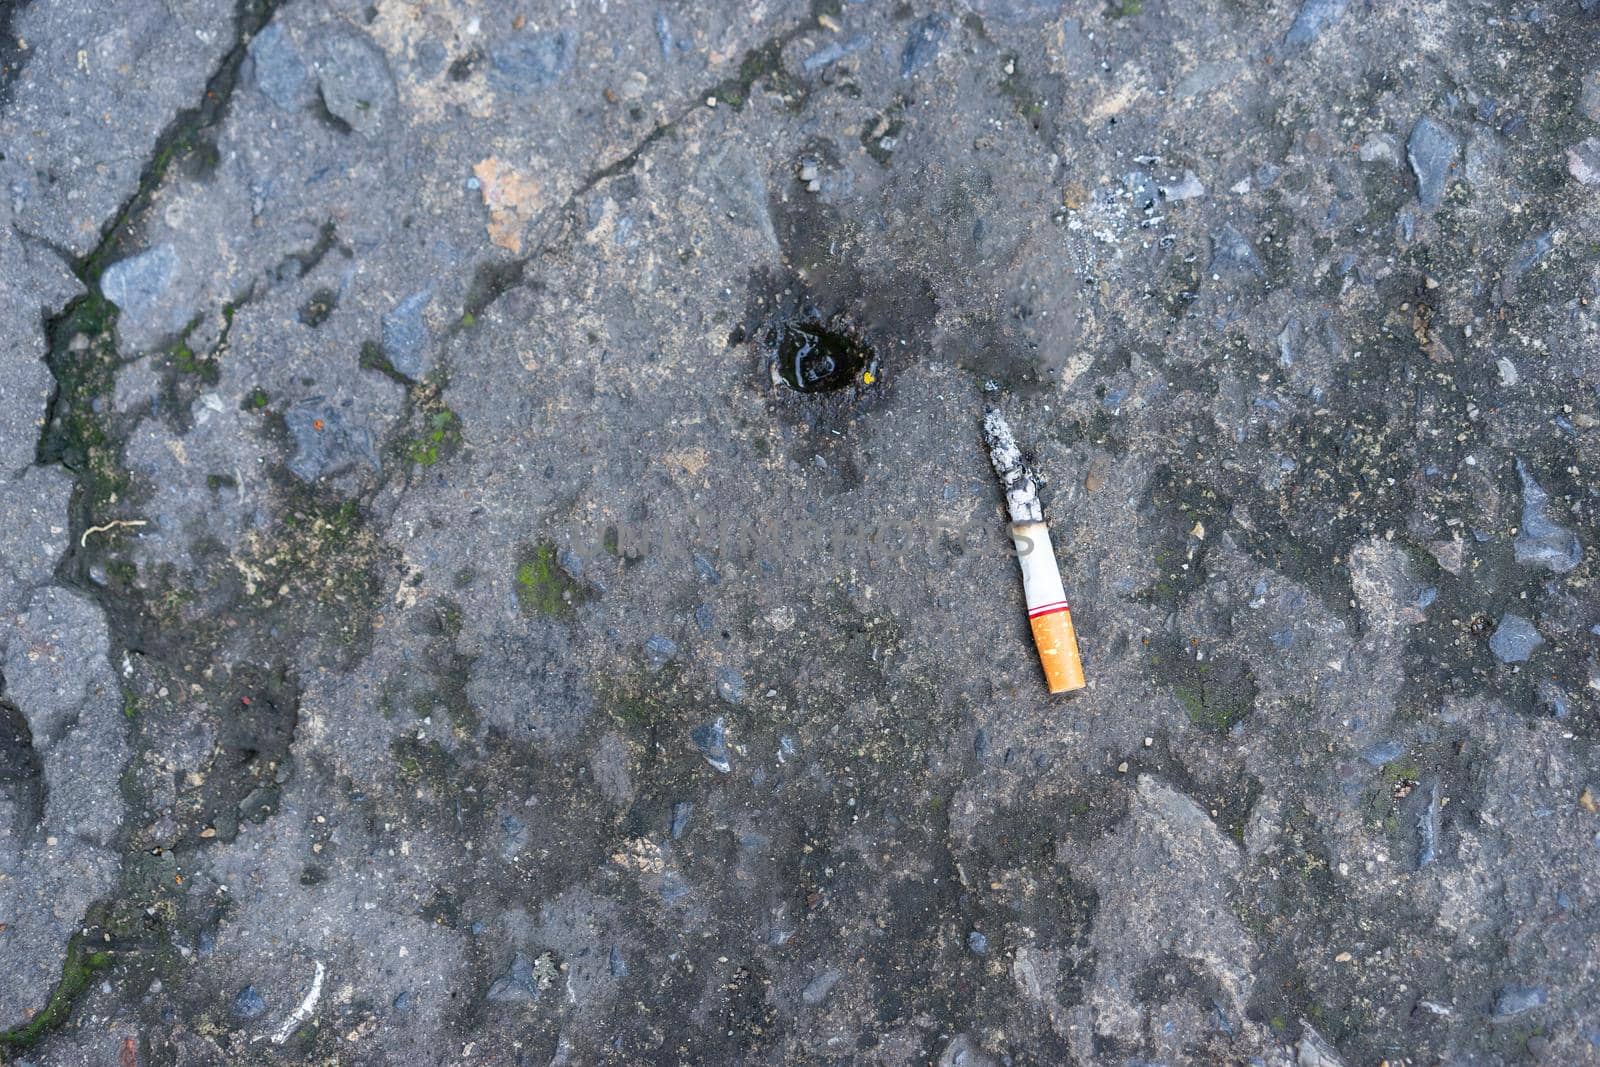 cigarette stub on the ground